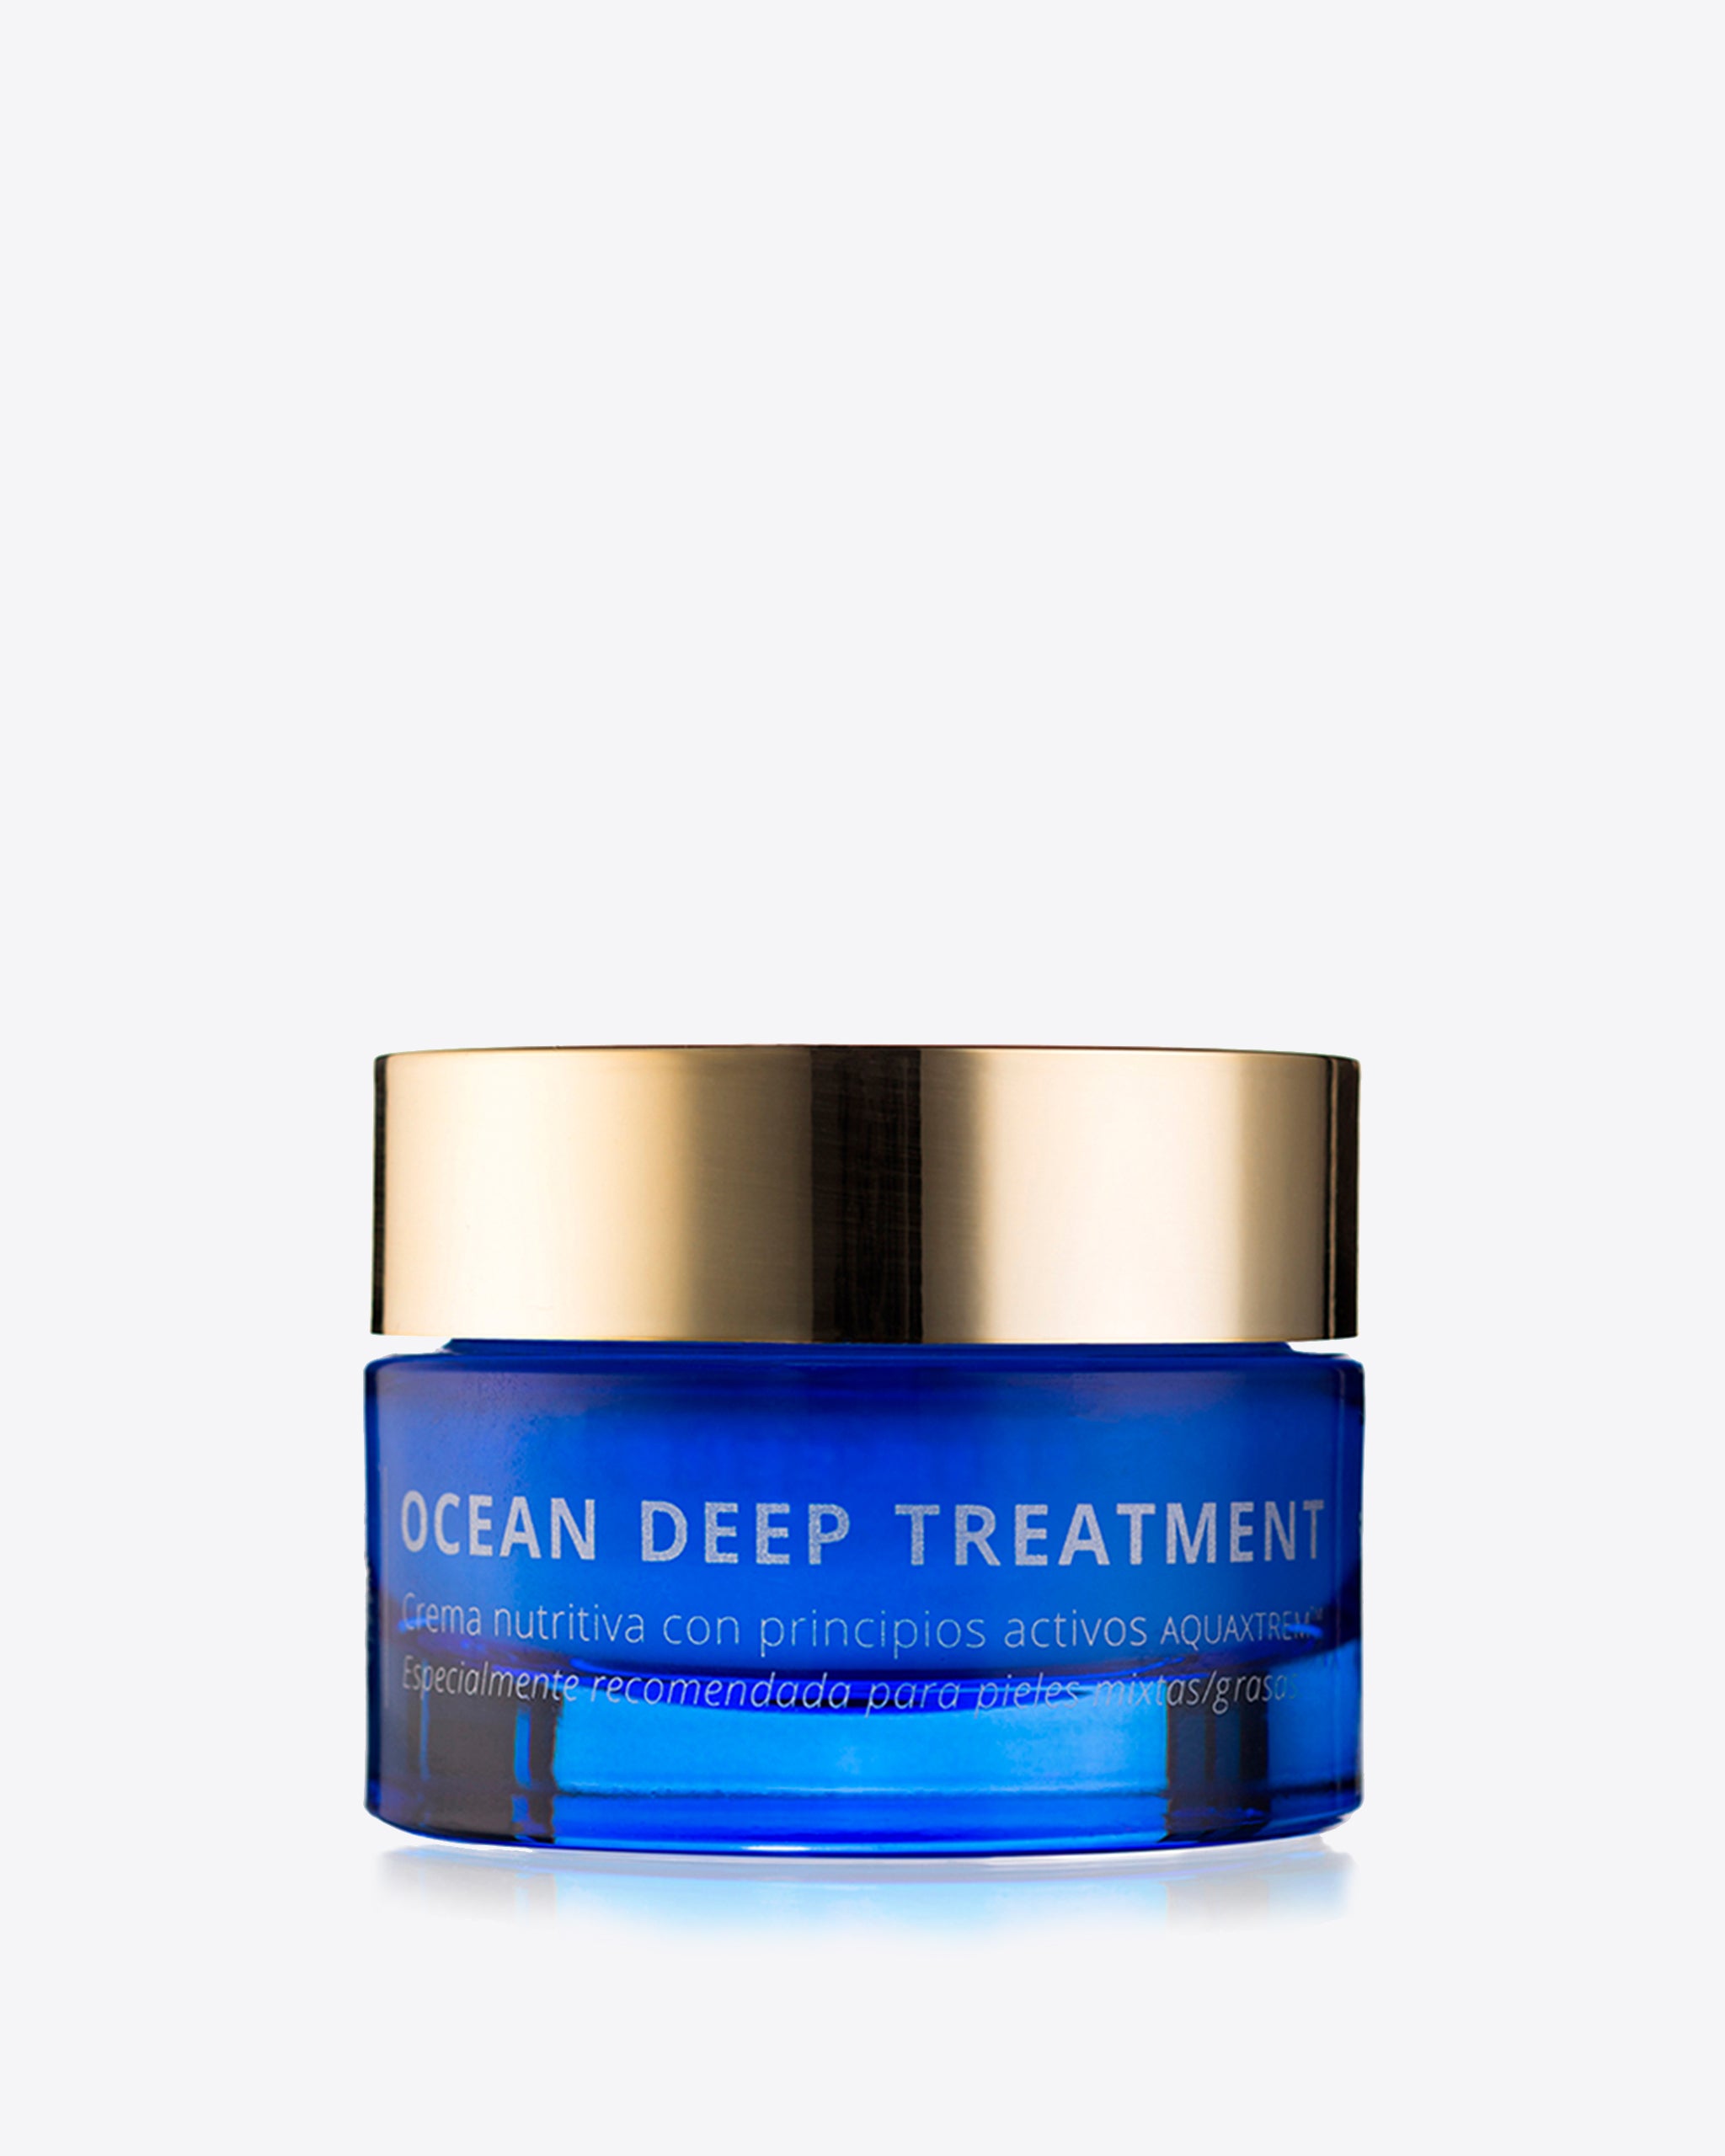 Ocean Deep Treatment long-lasting hydration anti-aging cream